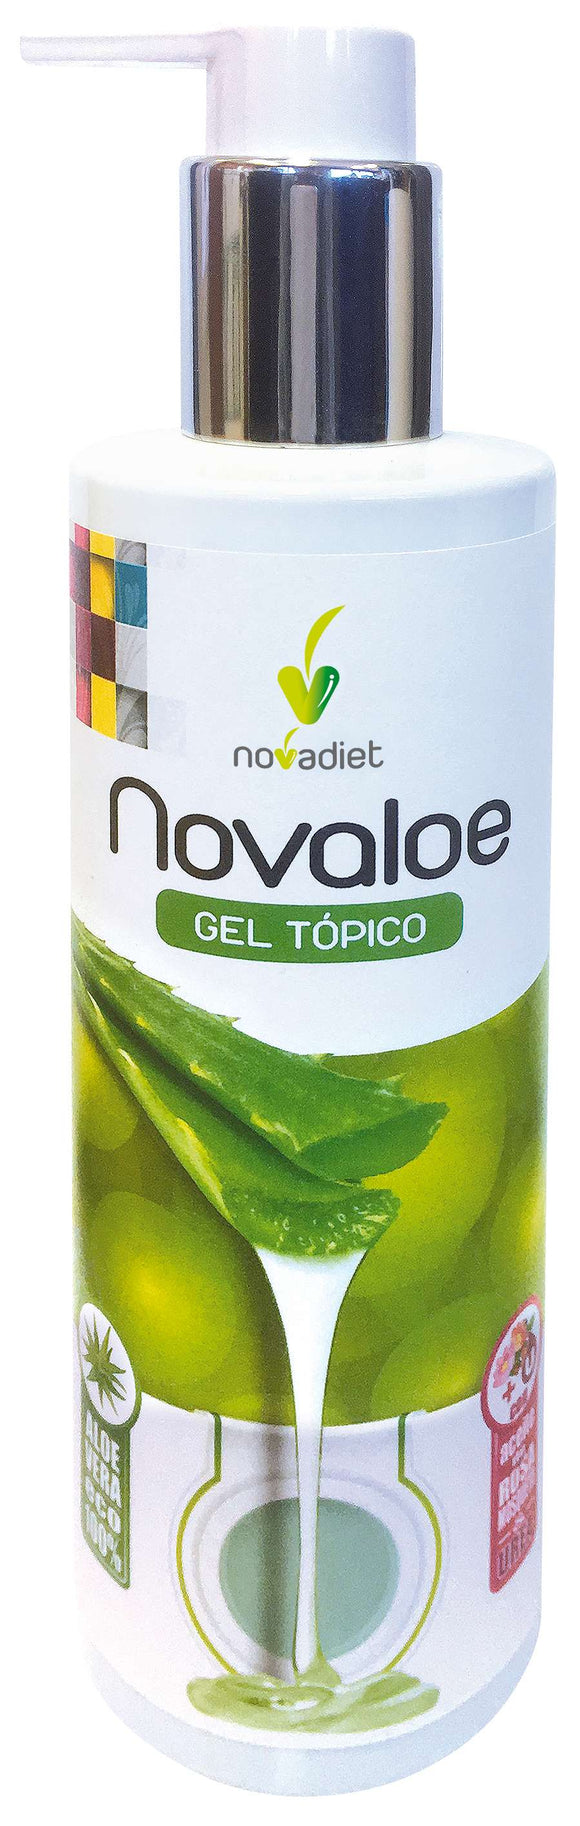 Novaloe Gel 250ml - Novadiet - Crisdietética